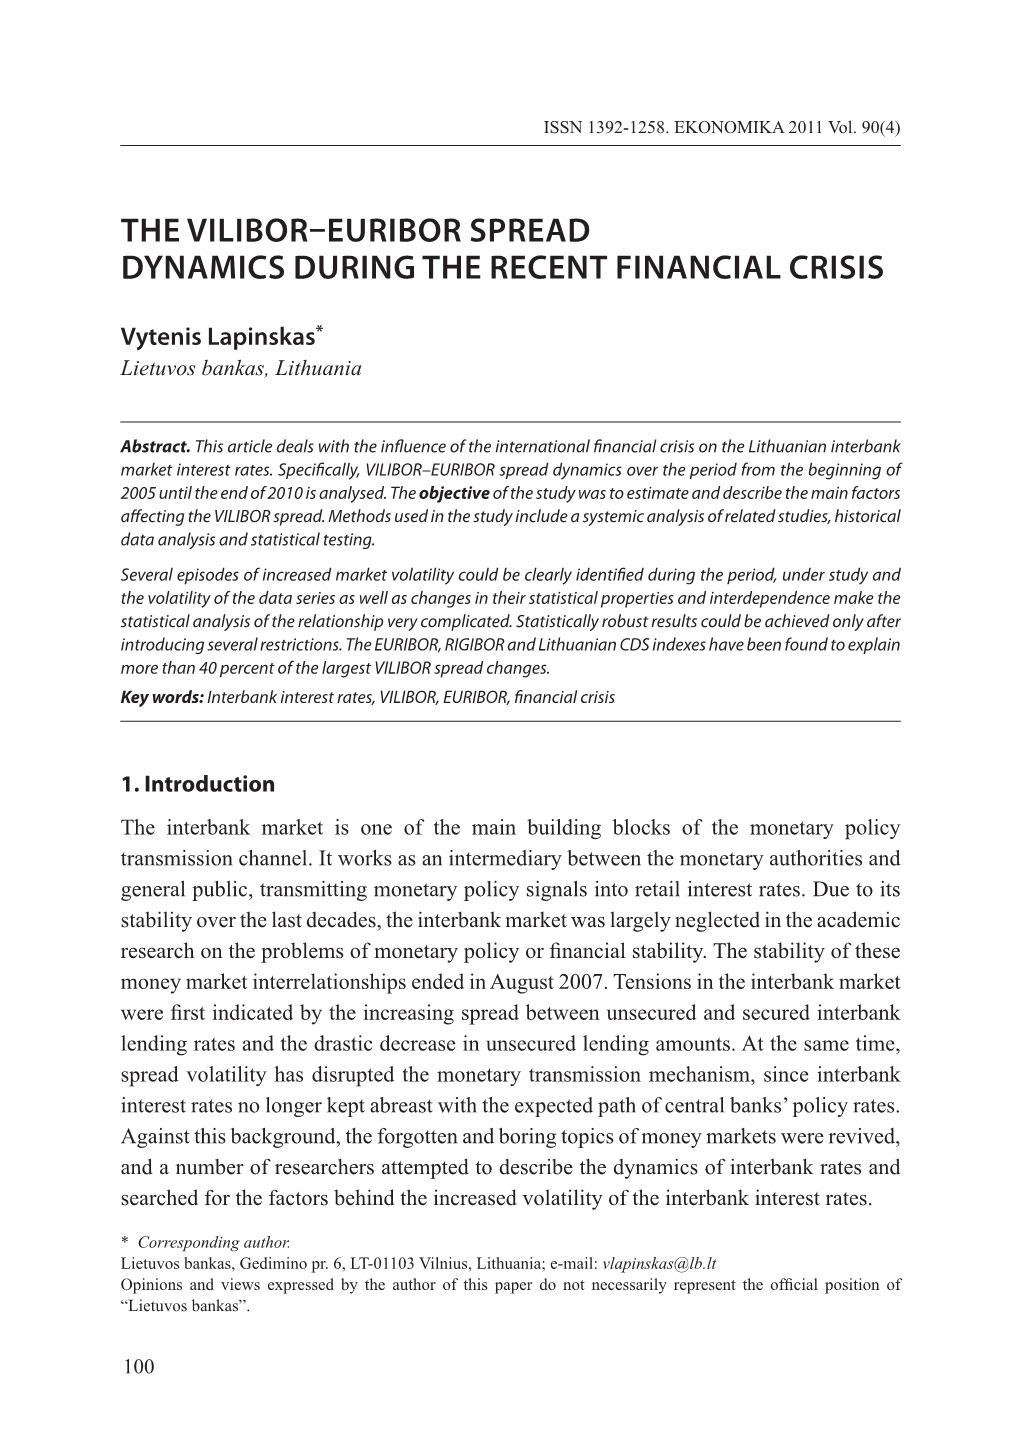 THE VILIBOR–EURIBOR Spread Dynamics During the Recent Financial Crisis